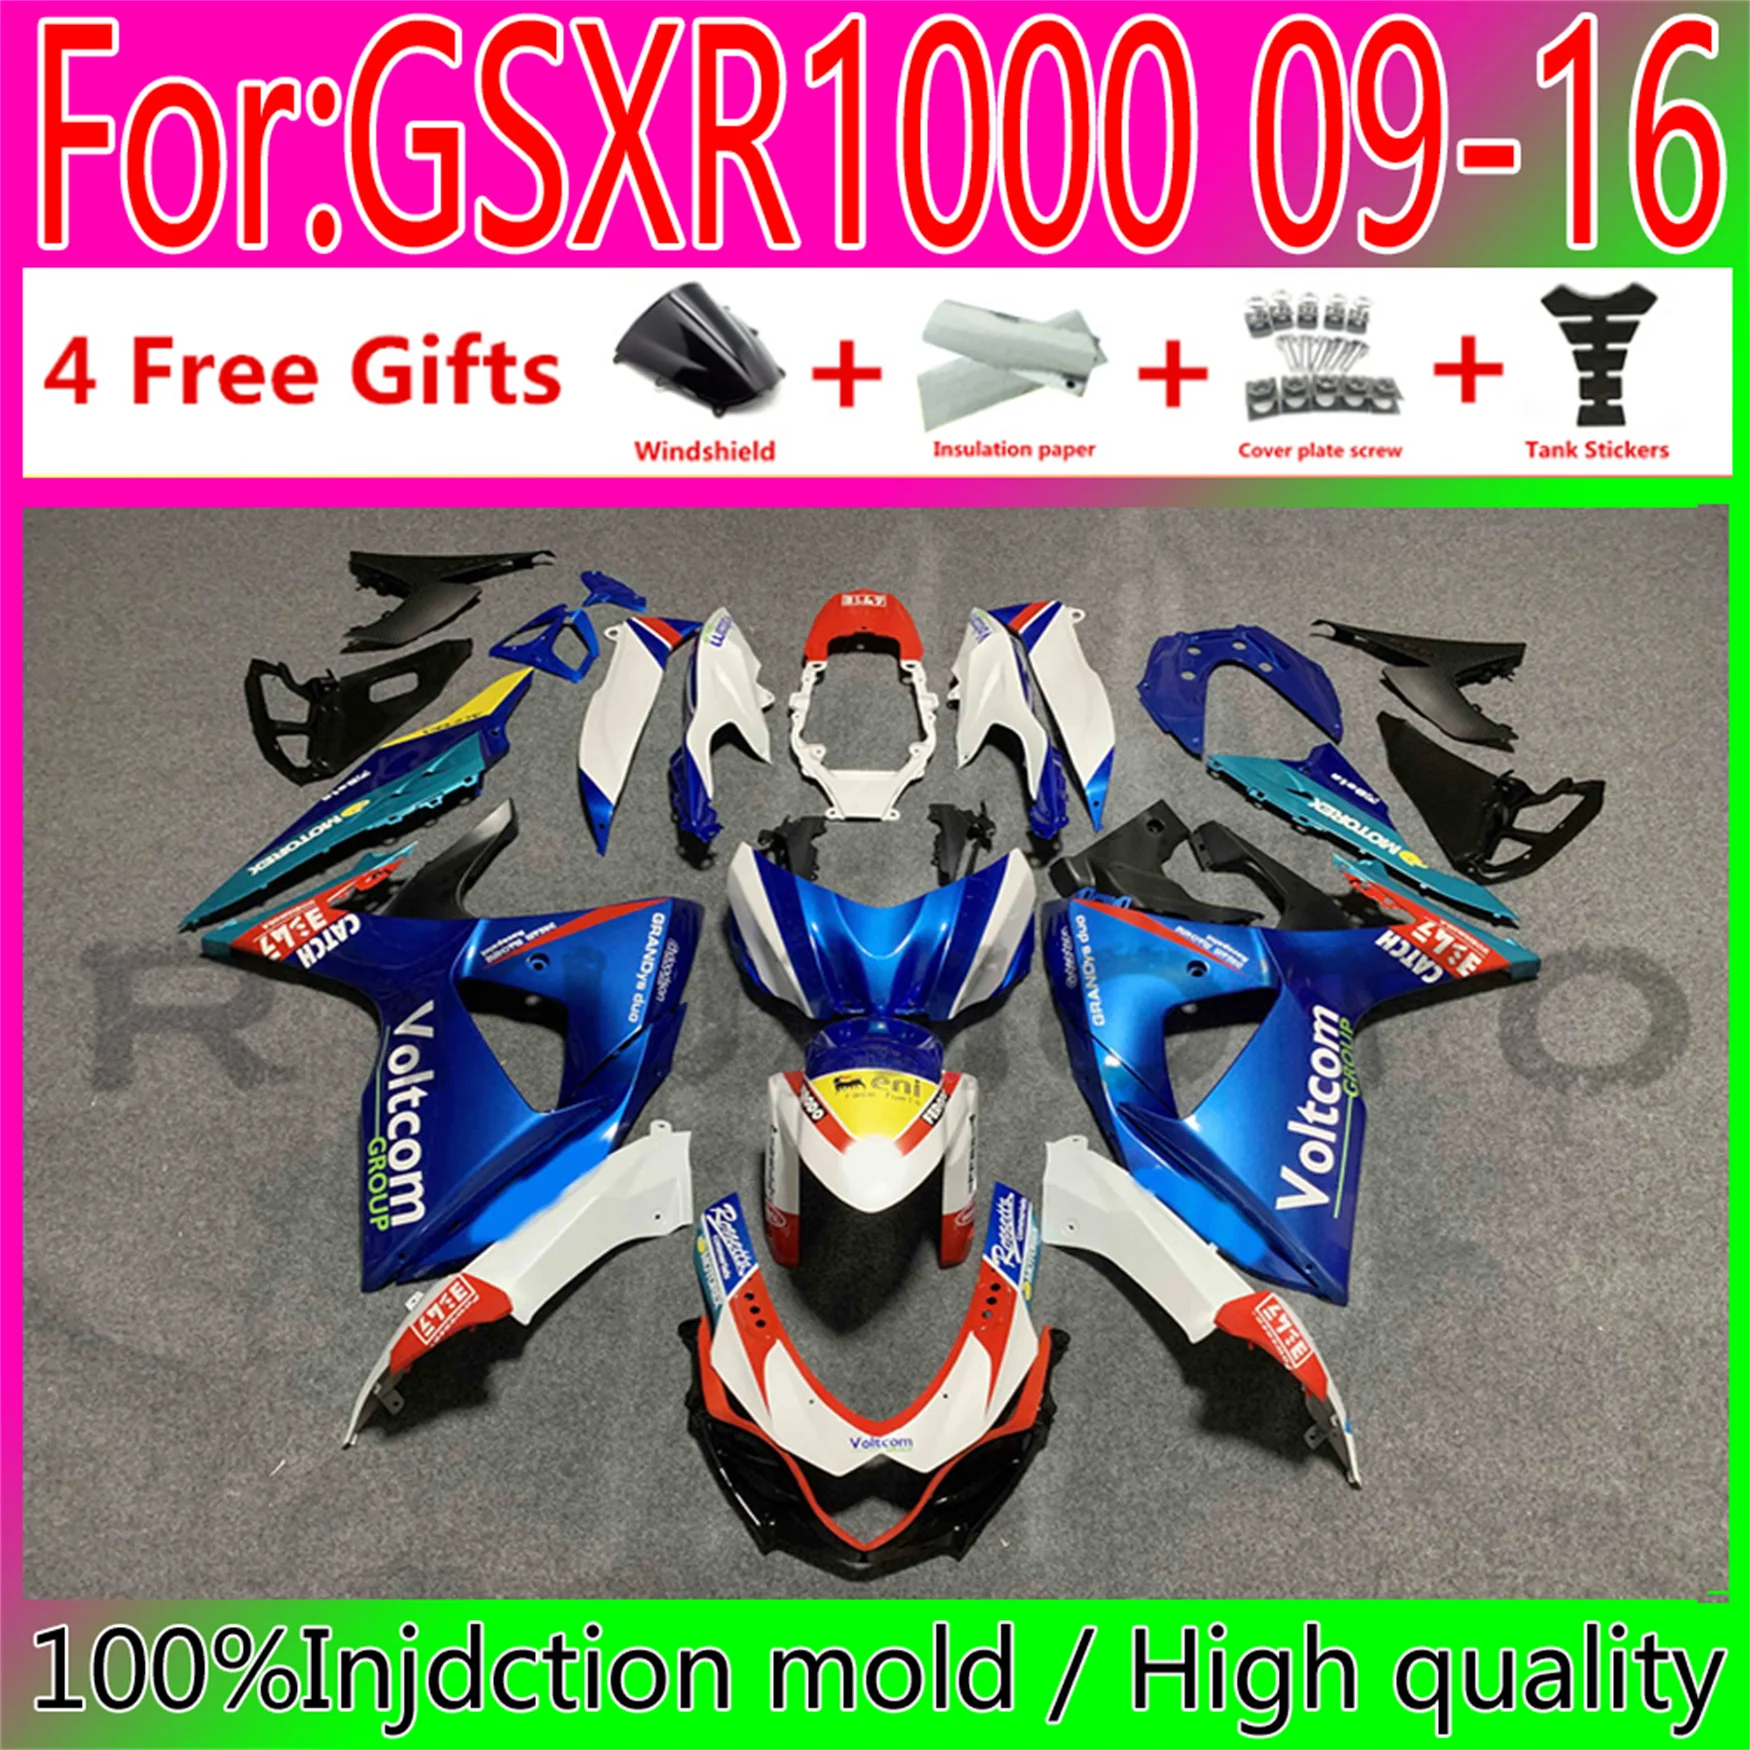 

New Motorcycles Fairings kit Fit For Suzuki GSXR1000 K9 2009 2016 GSXR-1000 09 10 11 12 13 14 15 16 bodywork fairing bule white